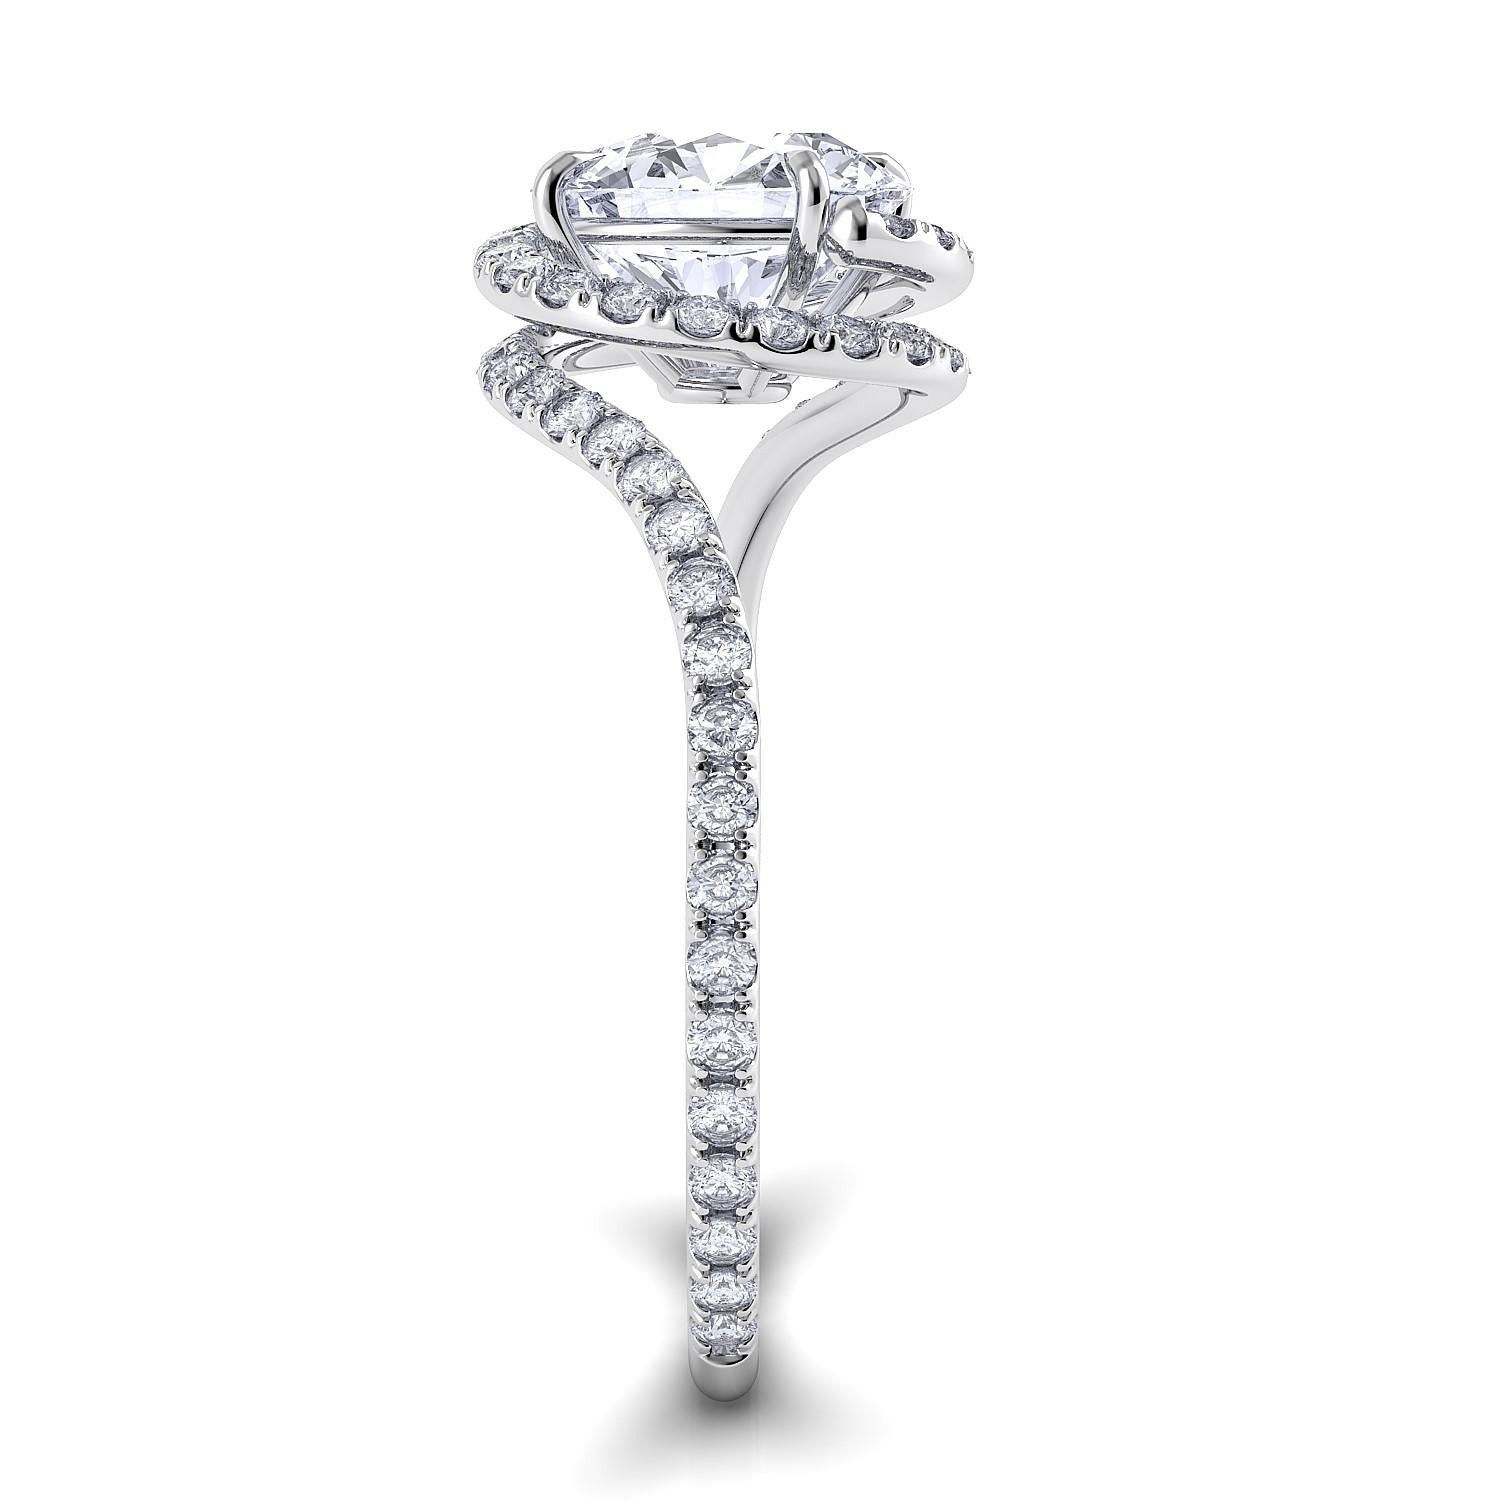 Danhov Abbraccio Award Winning Swirl Diamond Engagement Ring 'AE-100' In New Condition For Sale In Santa Monica, CA